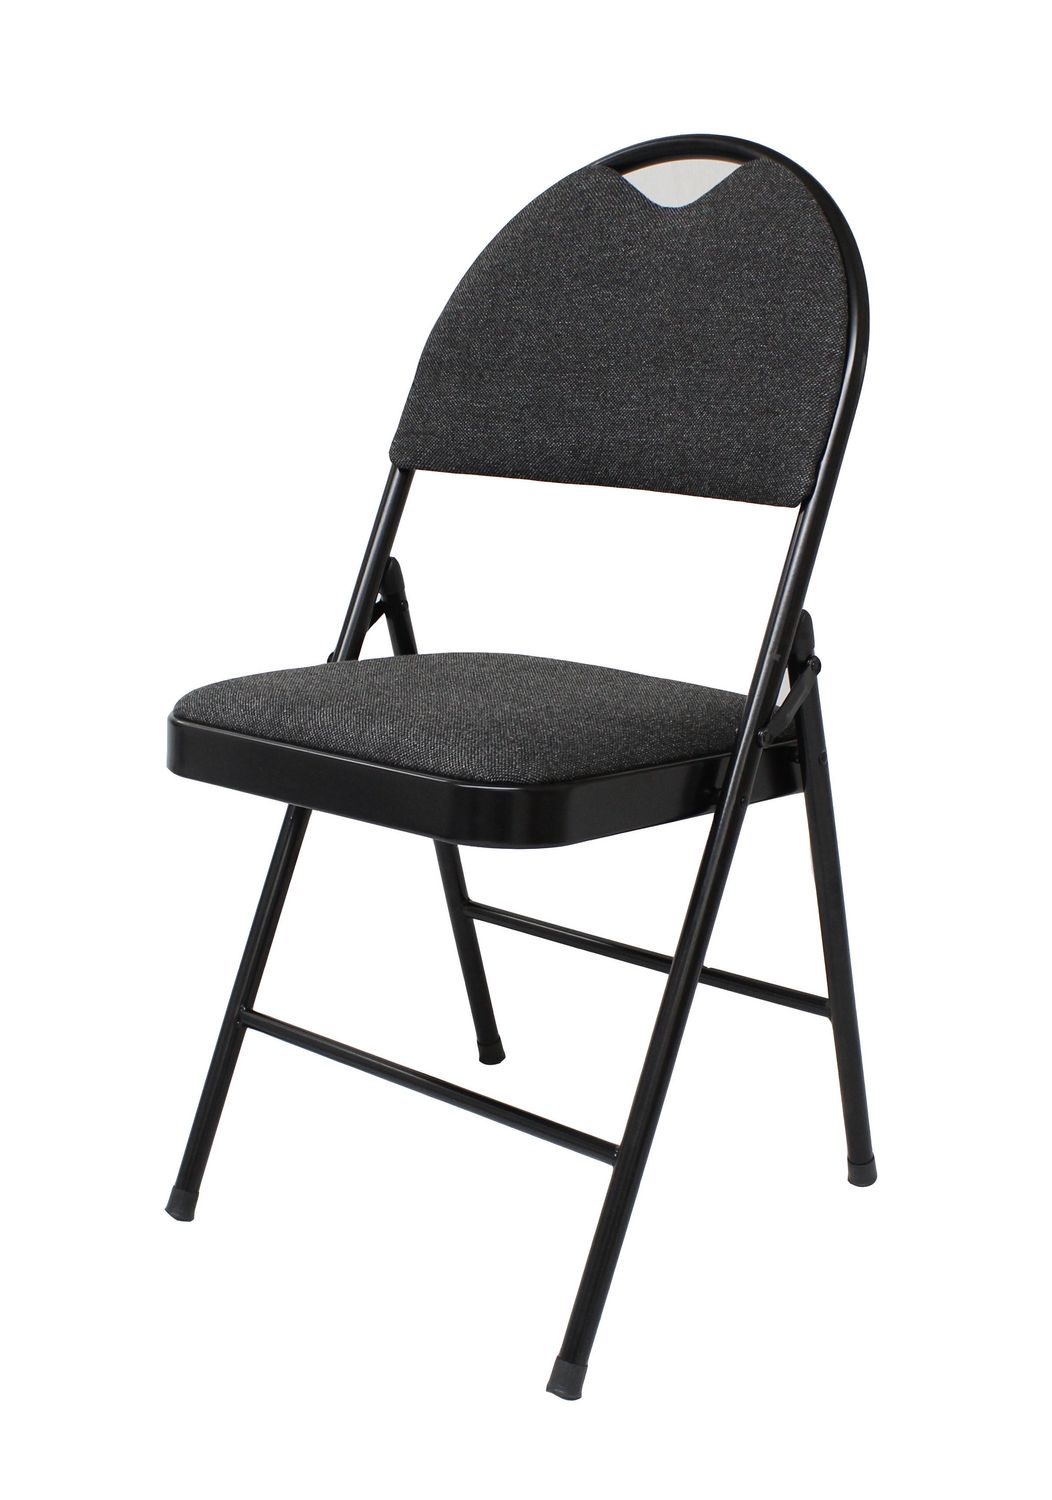 Gsc Deluxe Black Fabric Folding Chair Walmart Canada